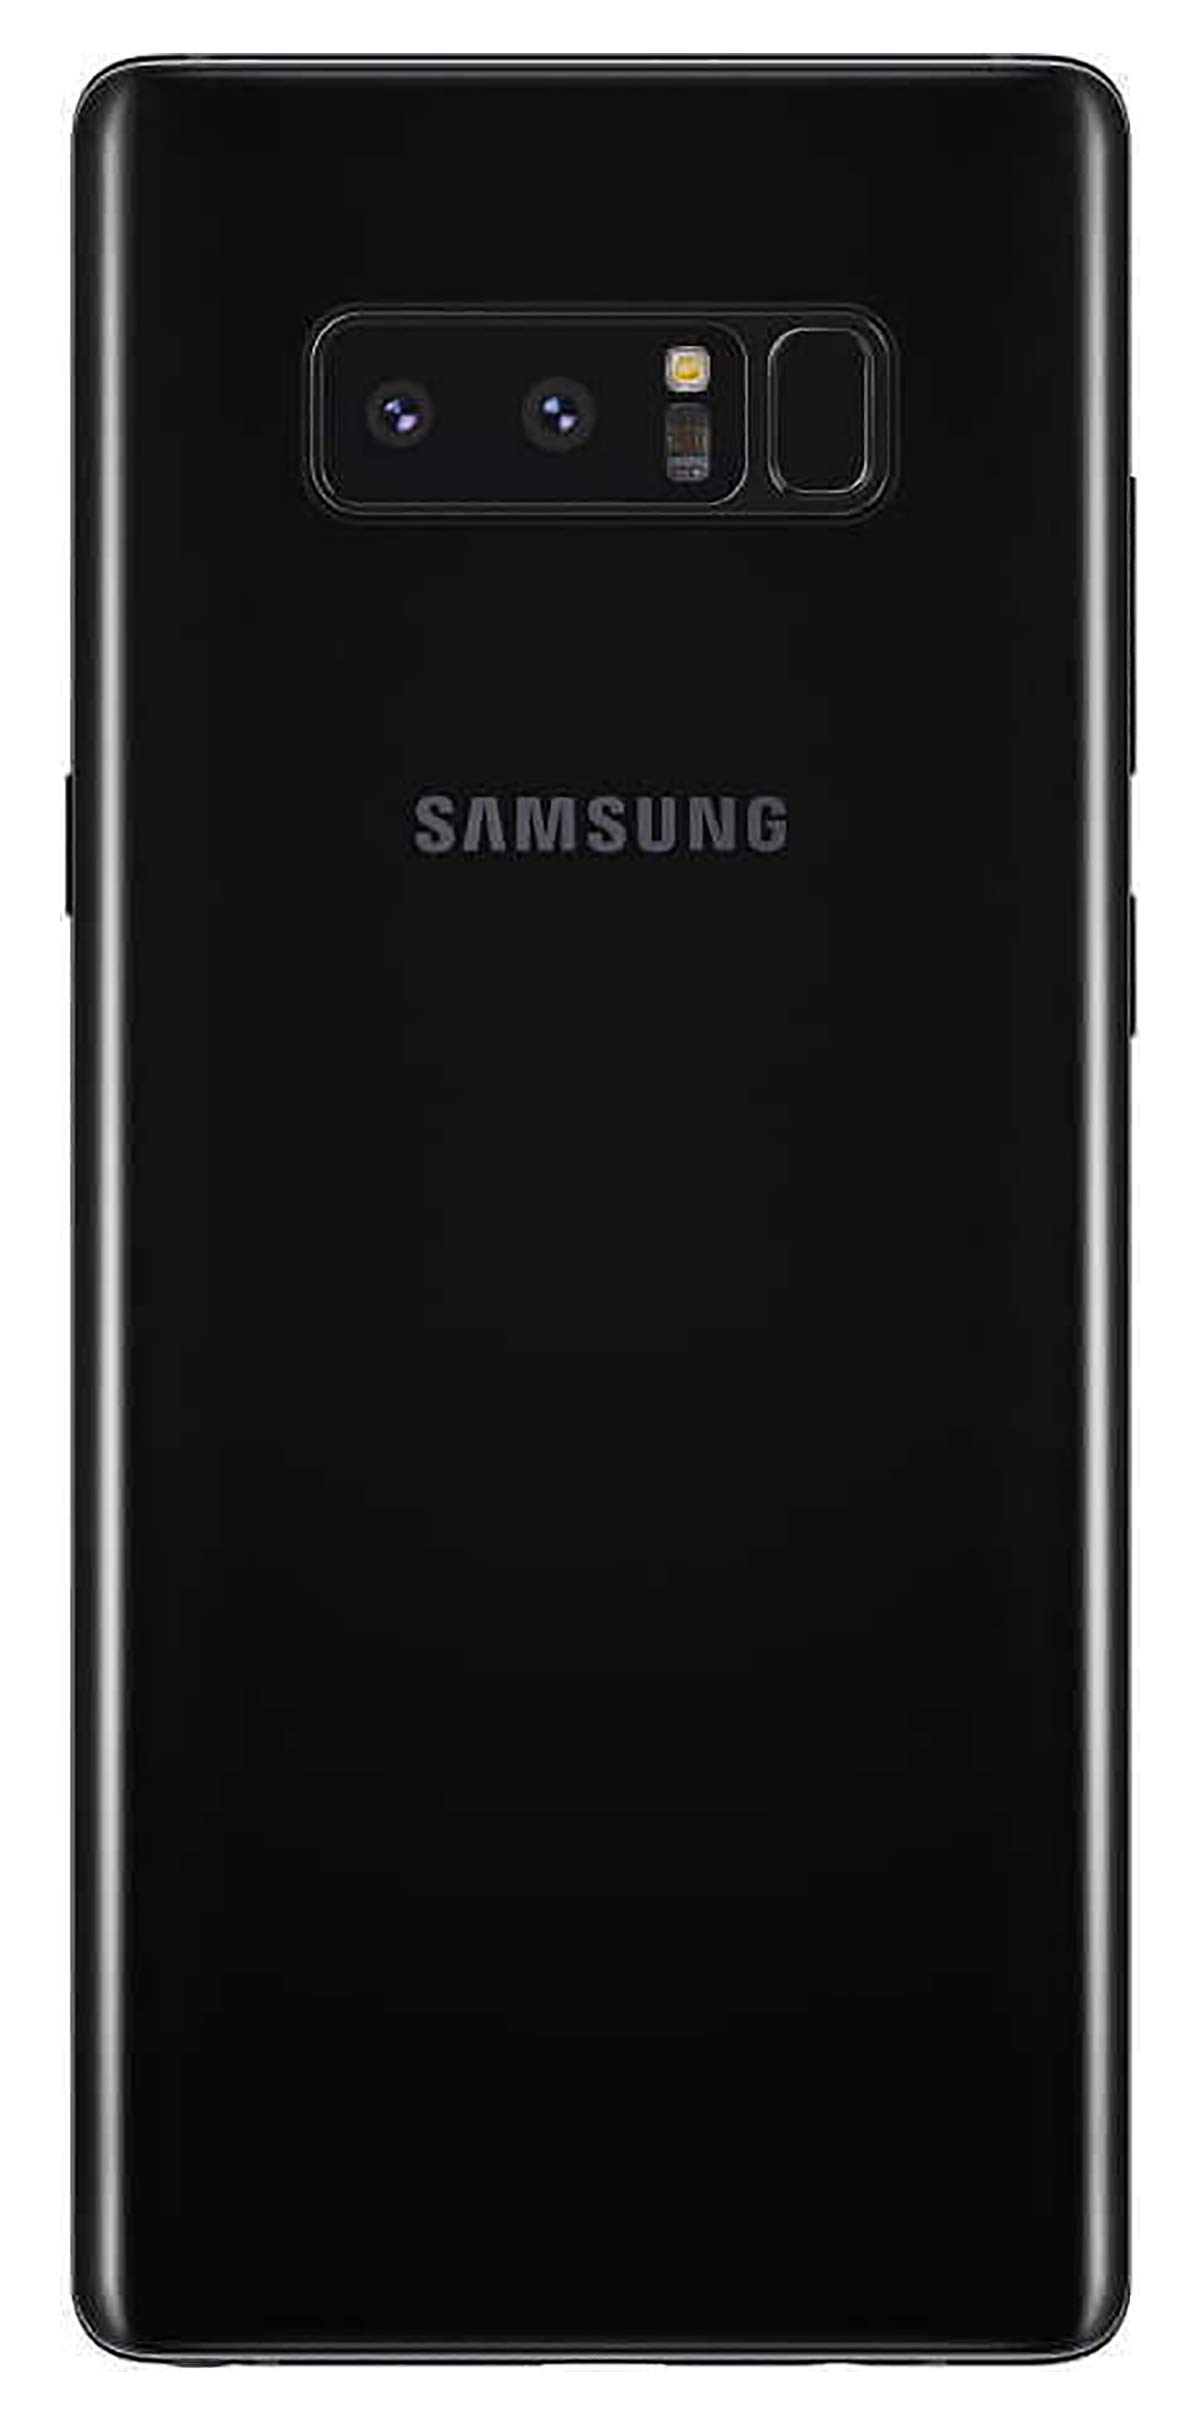 Samsung Galaxy Note 8, 64GB, Midnight Black - Fully Unlocked (Renewed)